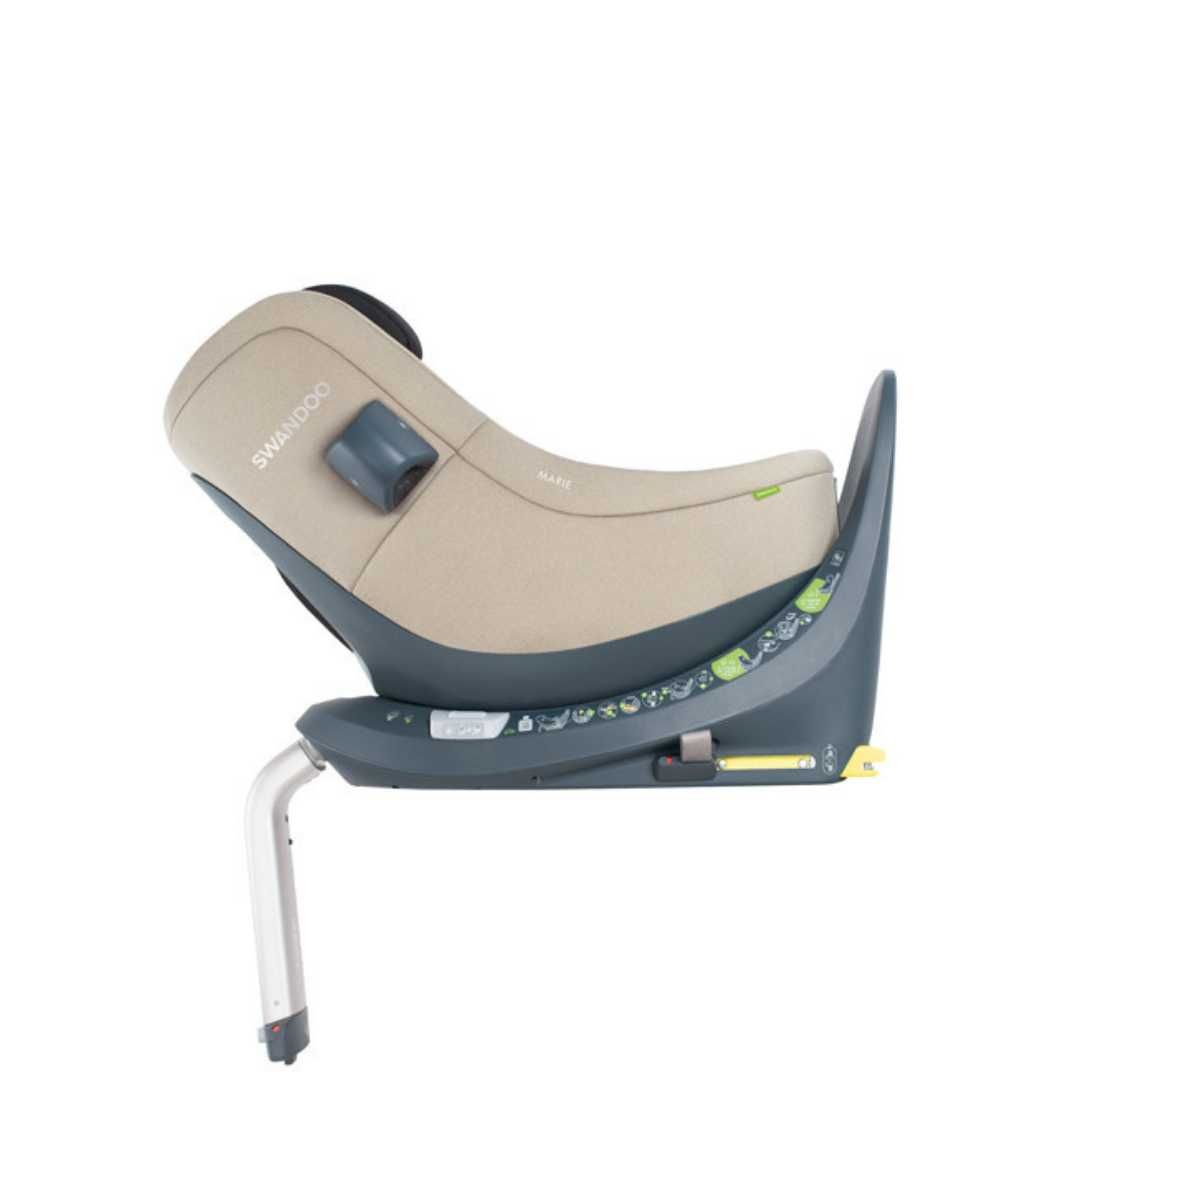 Стол за кола Swandoo Marie3  i-Size 360°  (0-18 кг)